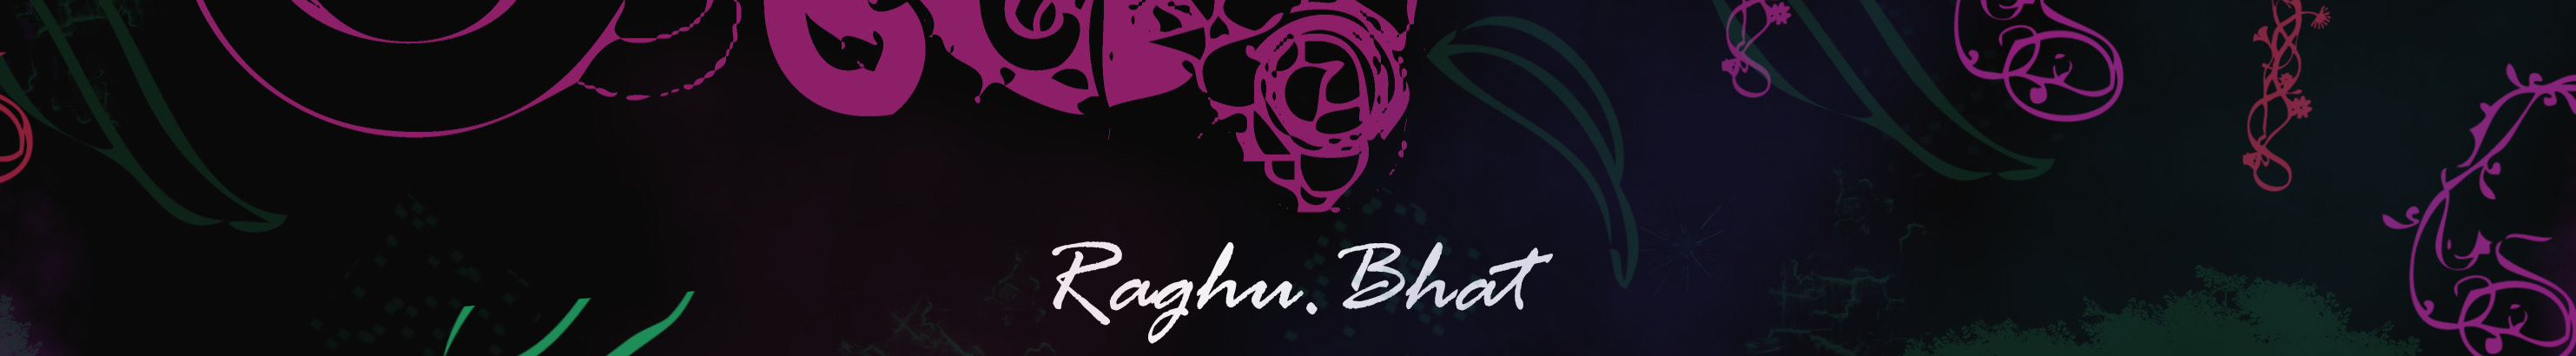 Raghu Bhat's profile banner